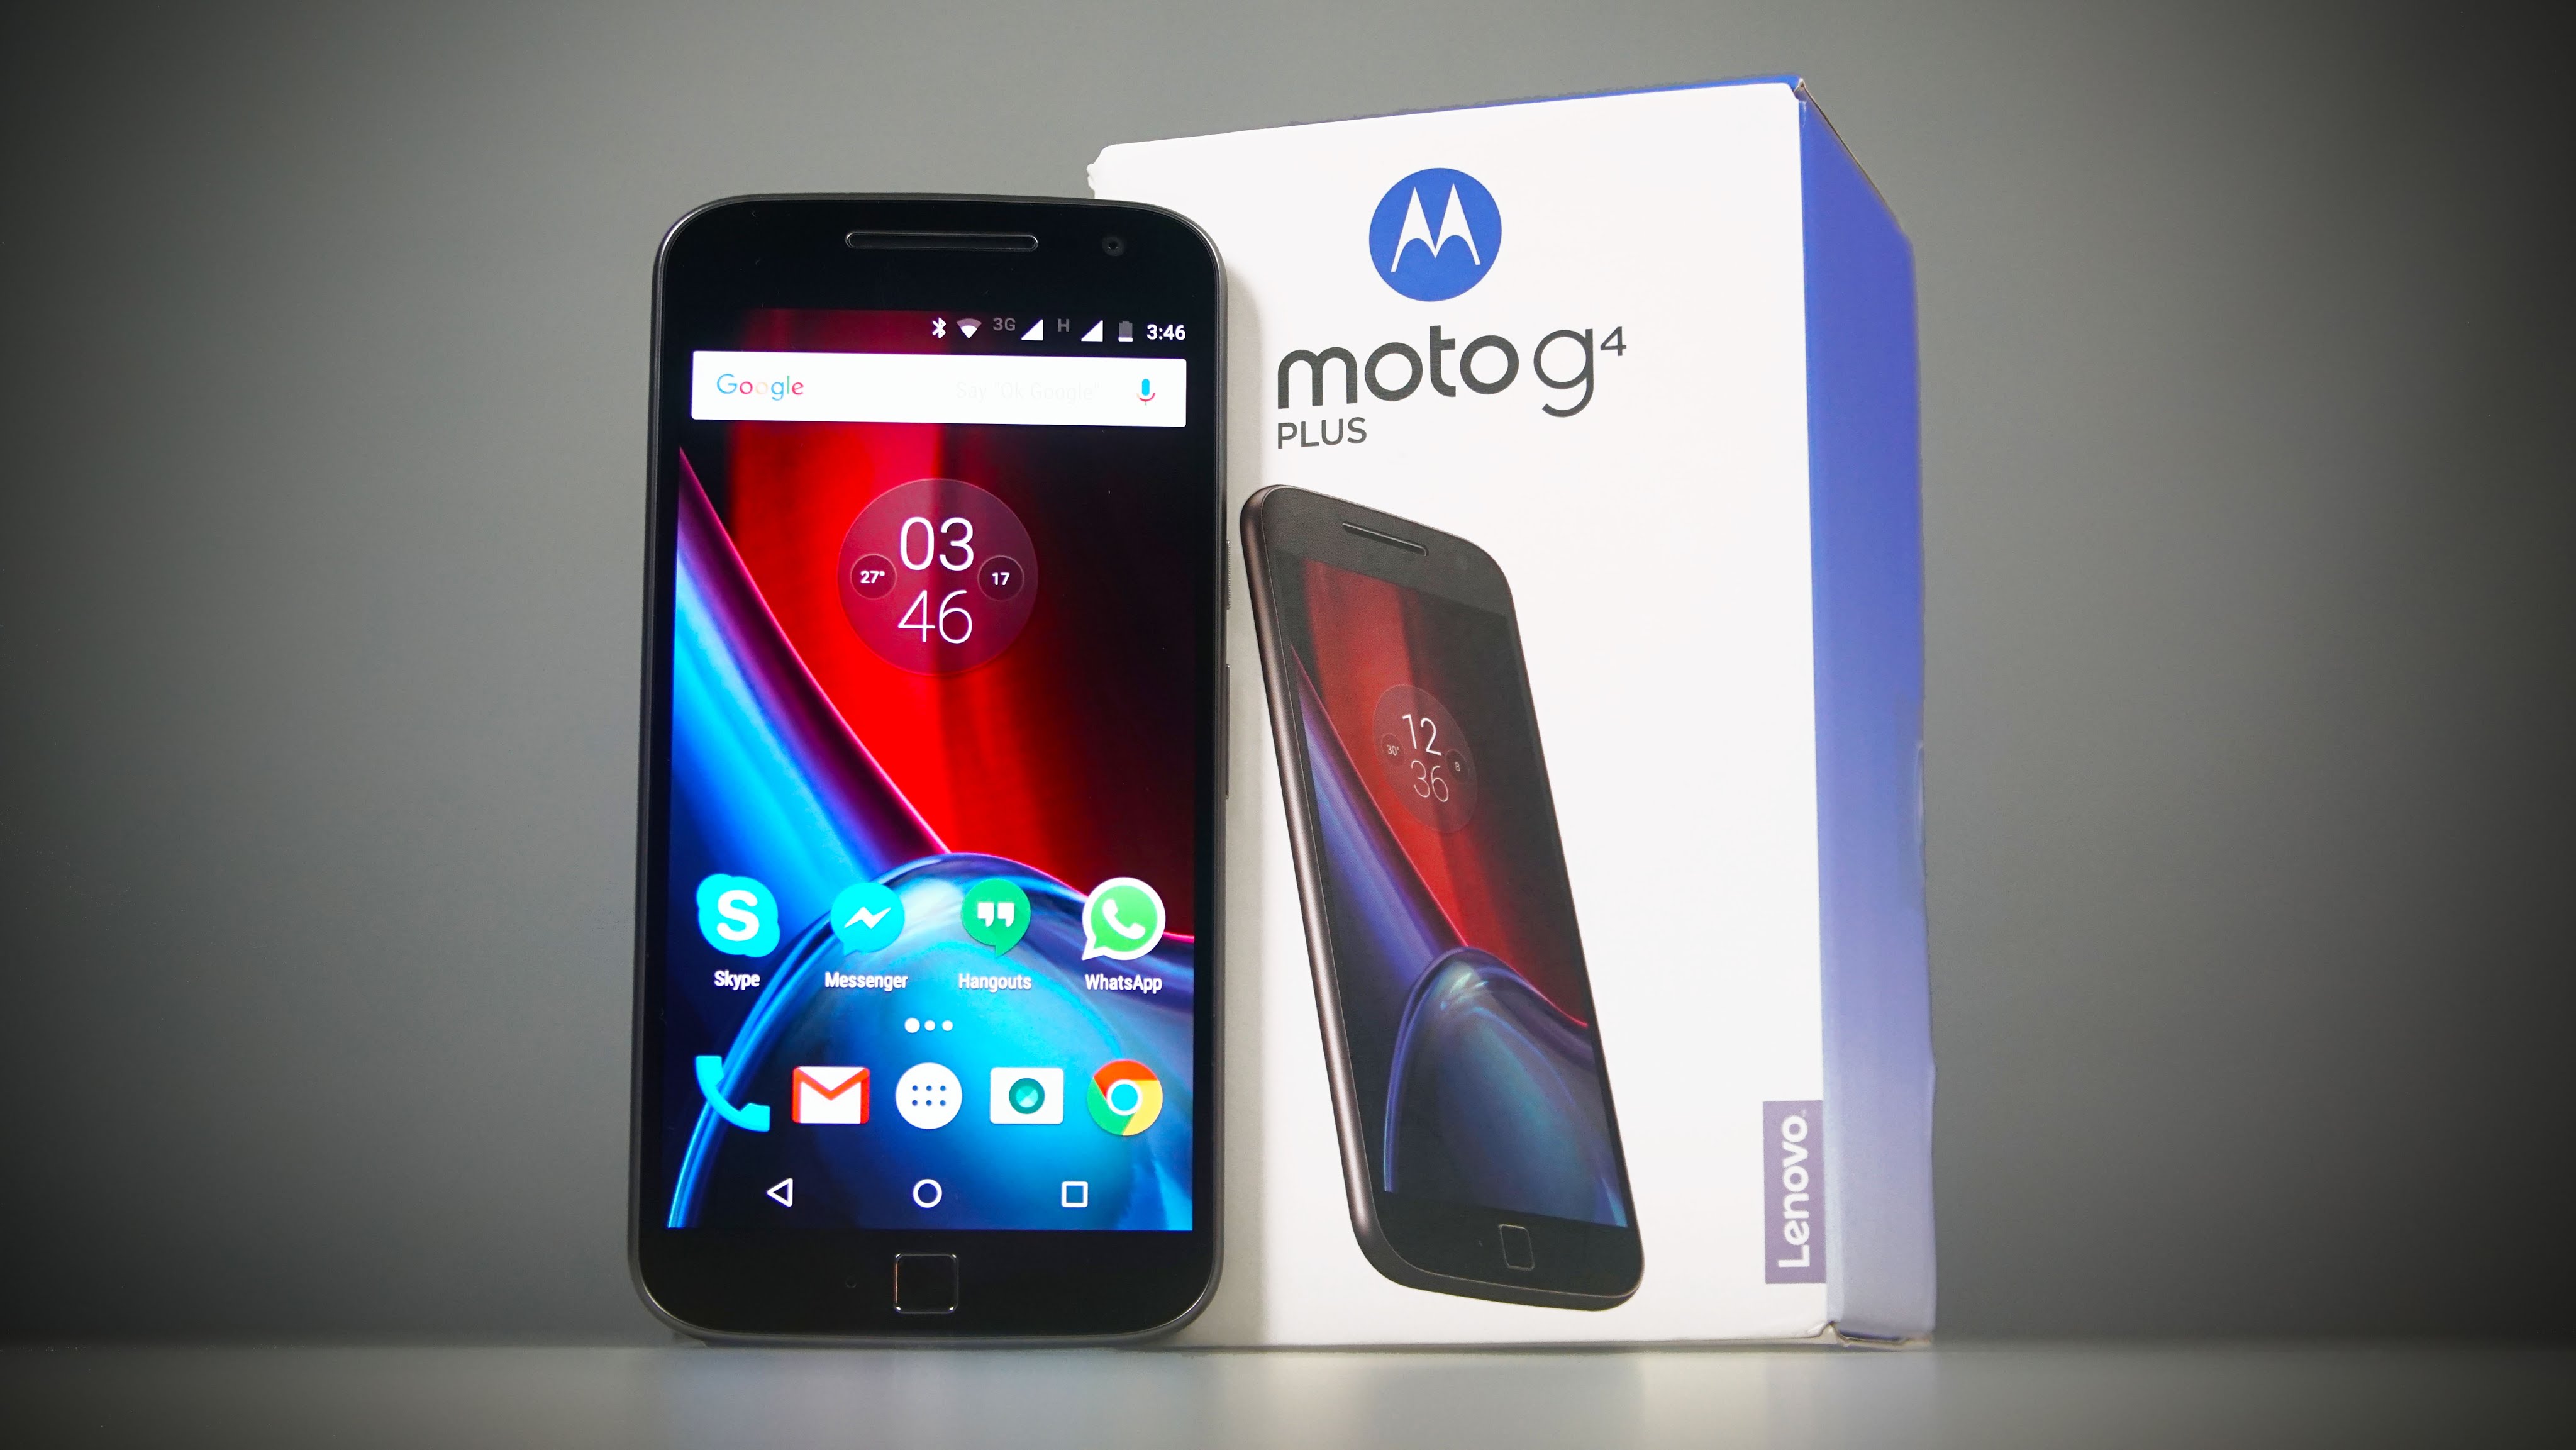 Motorola Moto G4 Plus - best phone under 10000